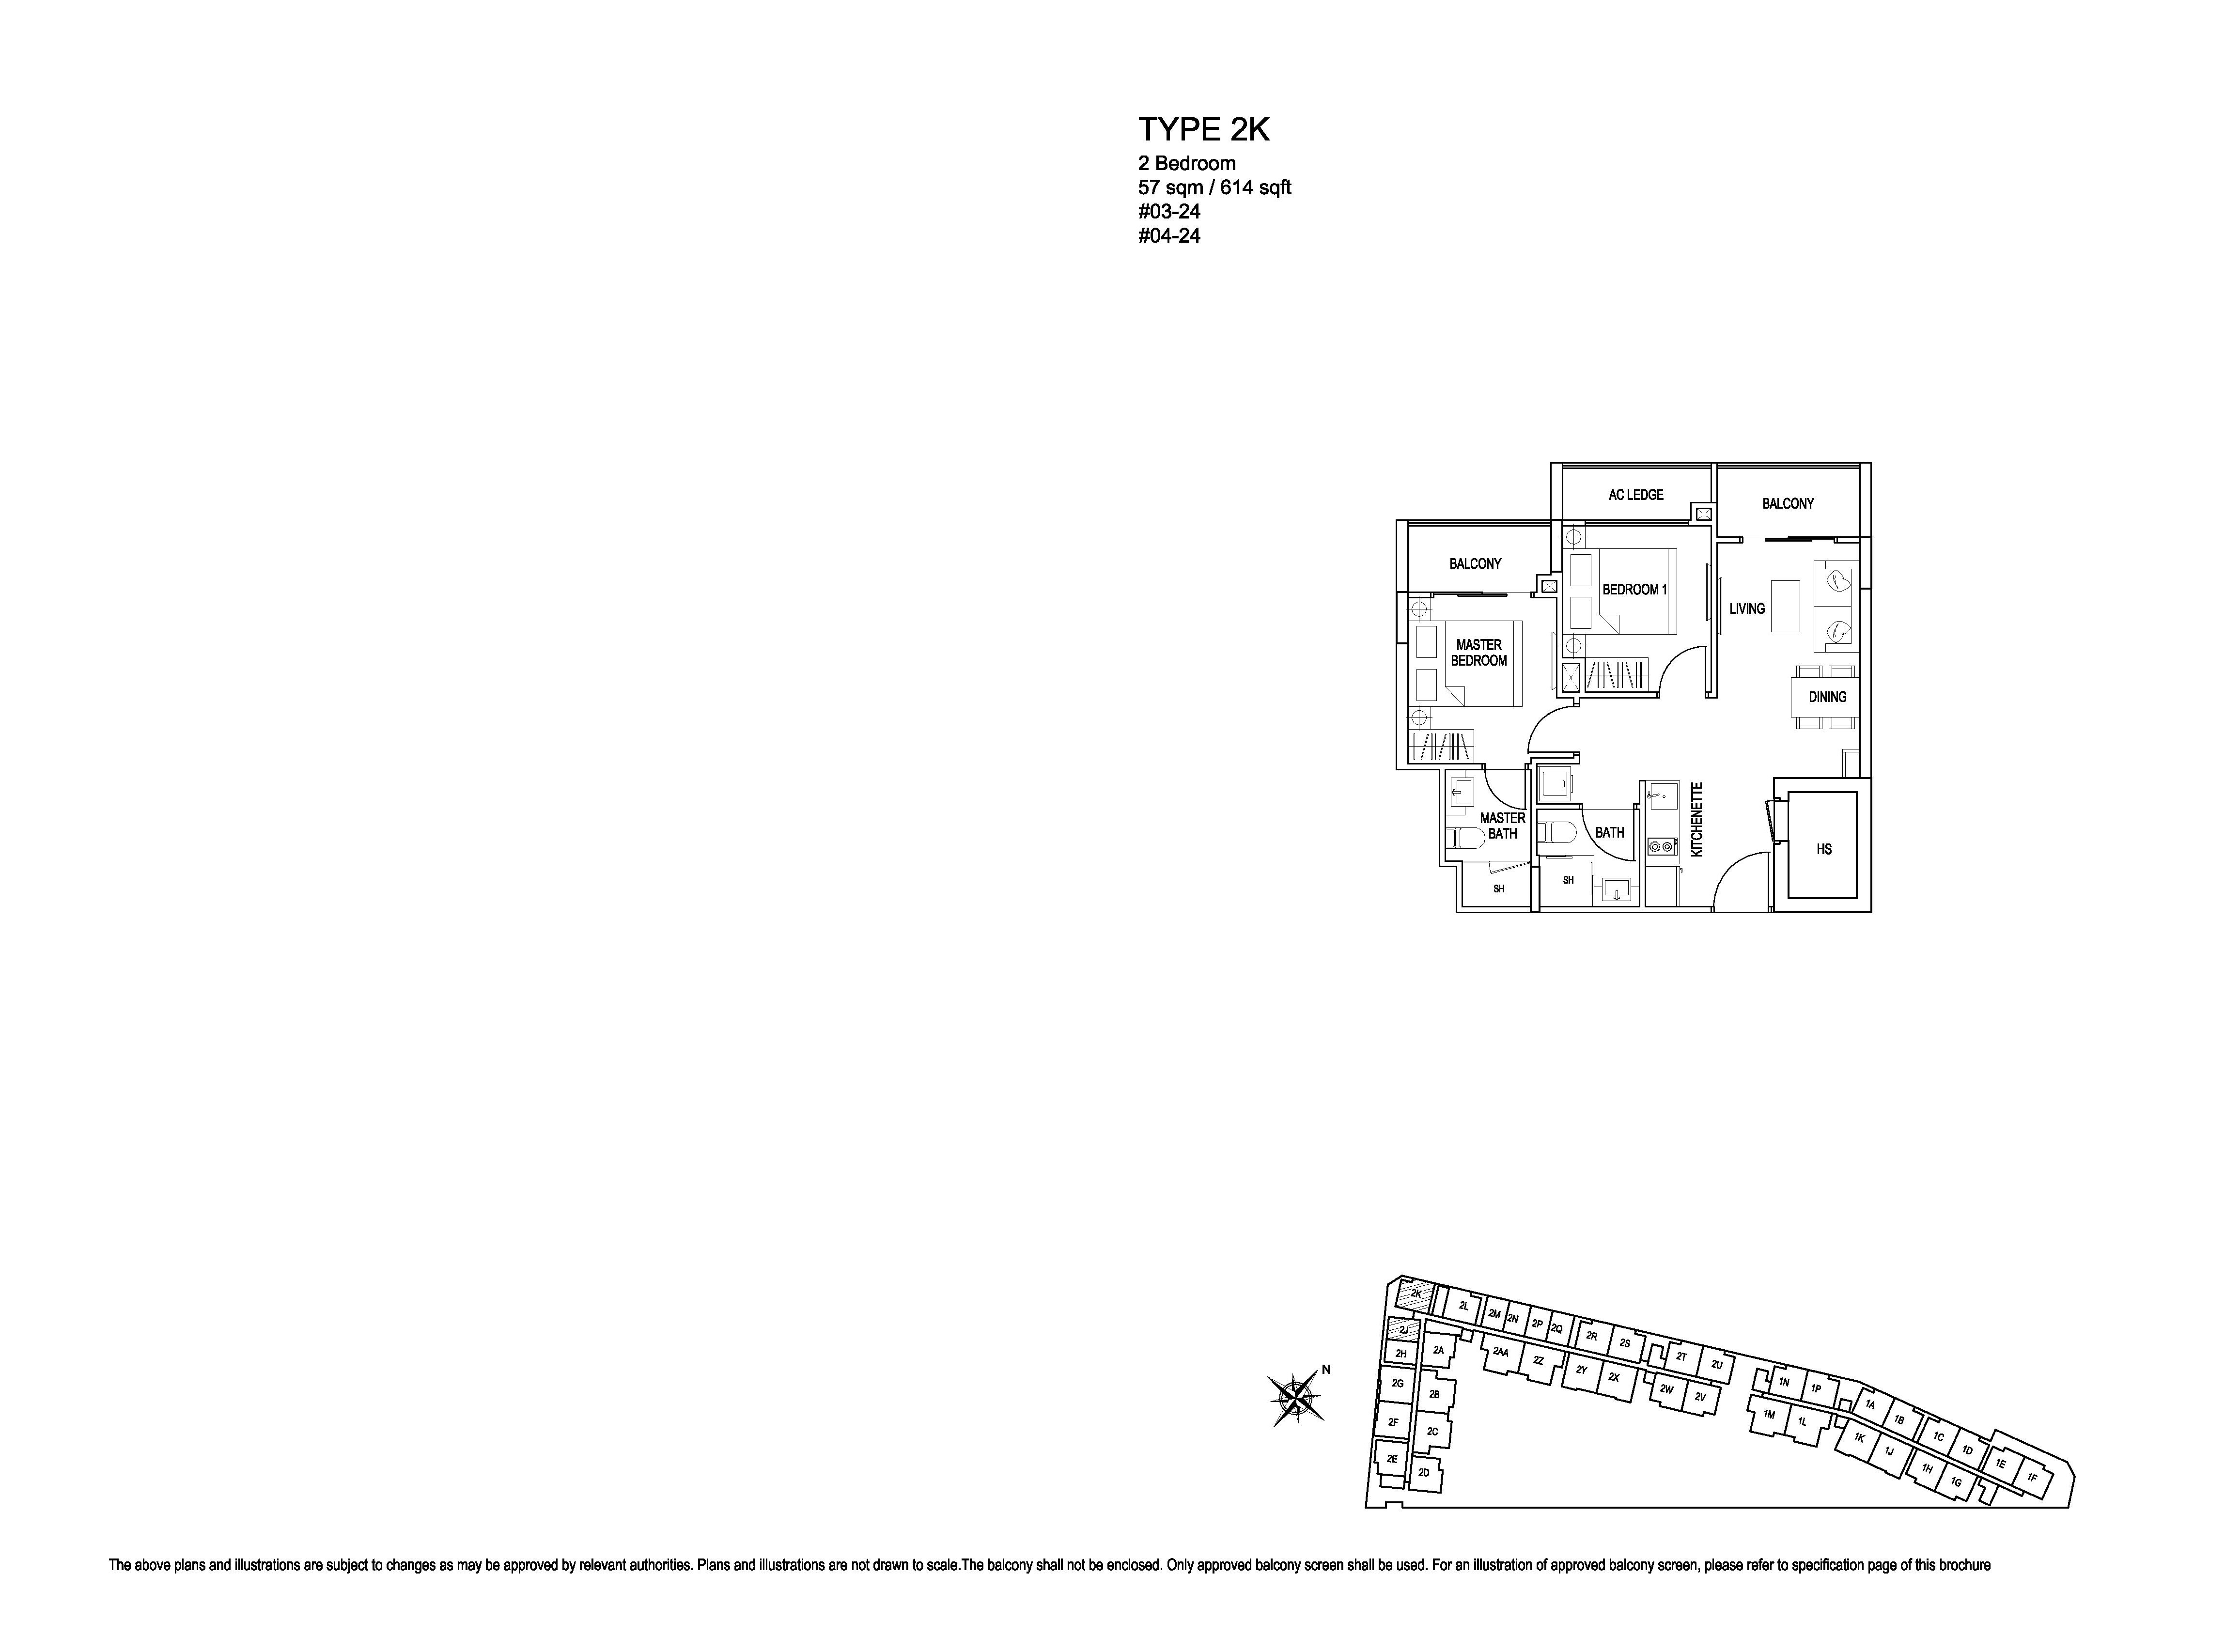 Kensington Square 2 Bedroom Floor Plans Type 2K